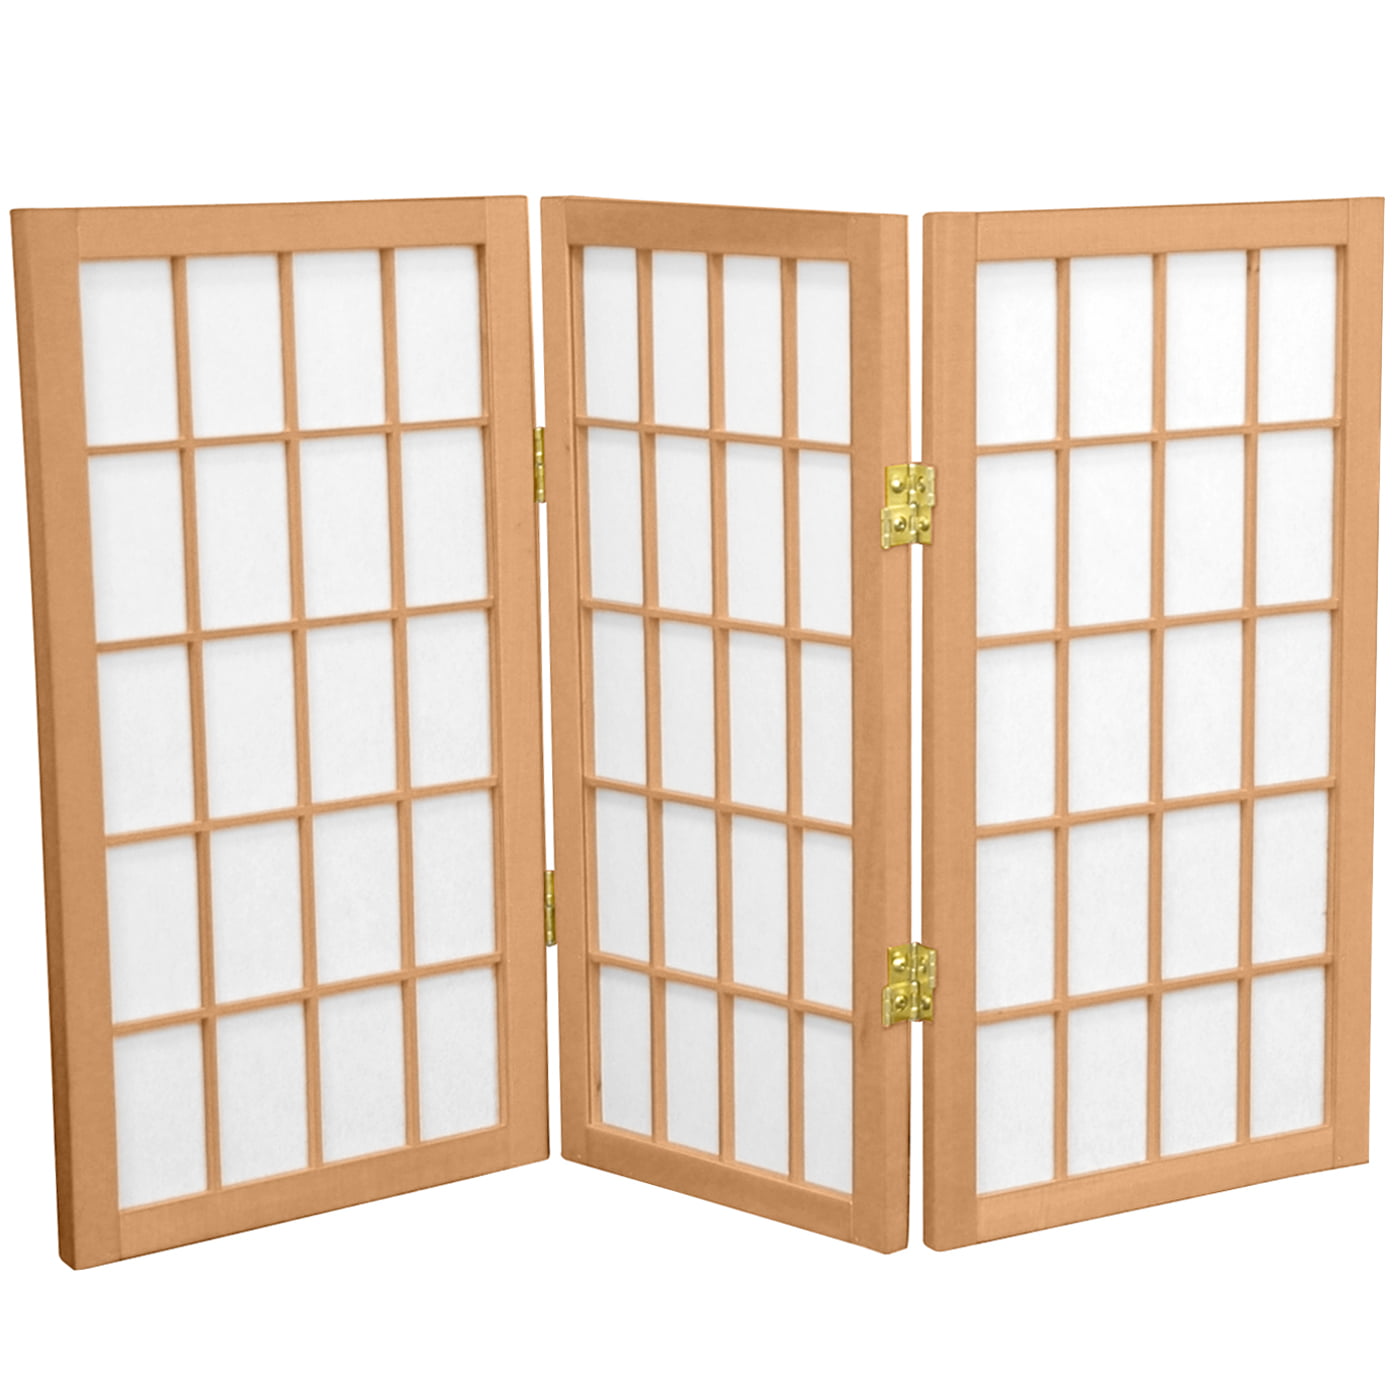 3 Panels Rosewood B Tall Desktop Window Pane Shoji Screen Oriental Furniture 2 ft